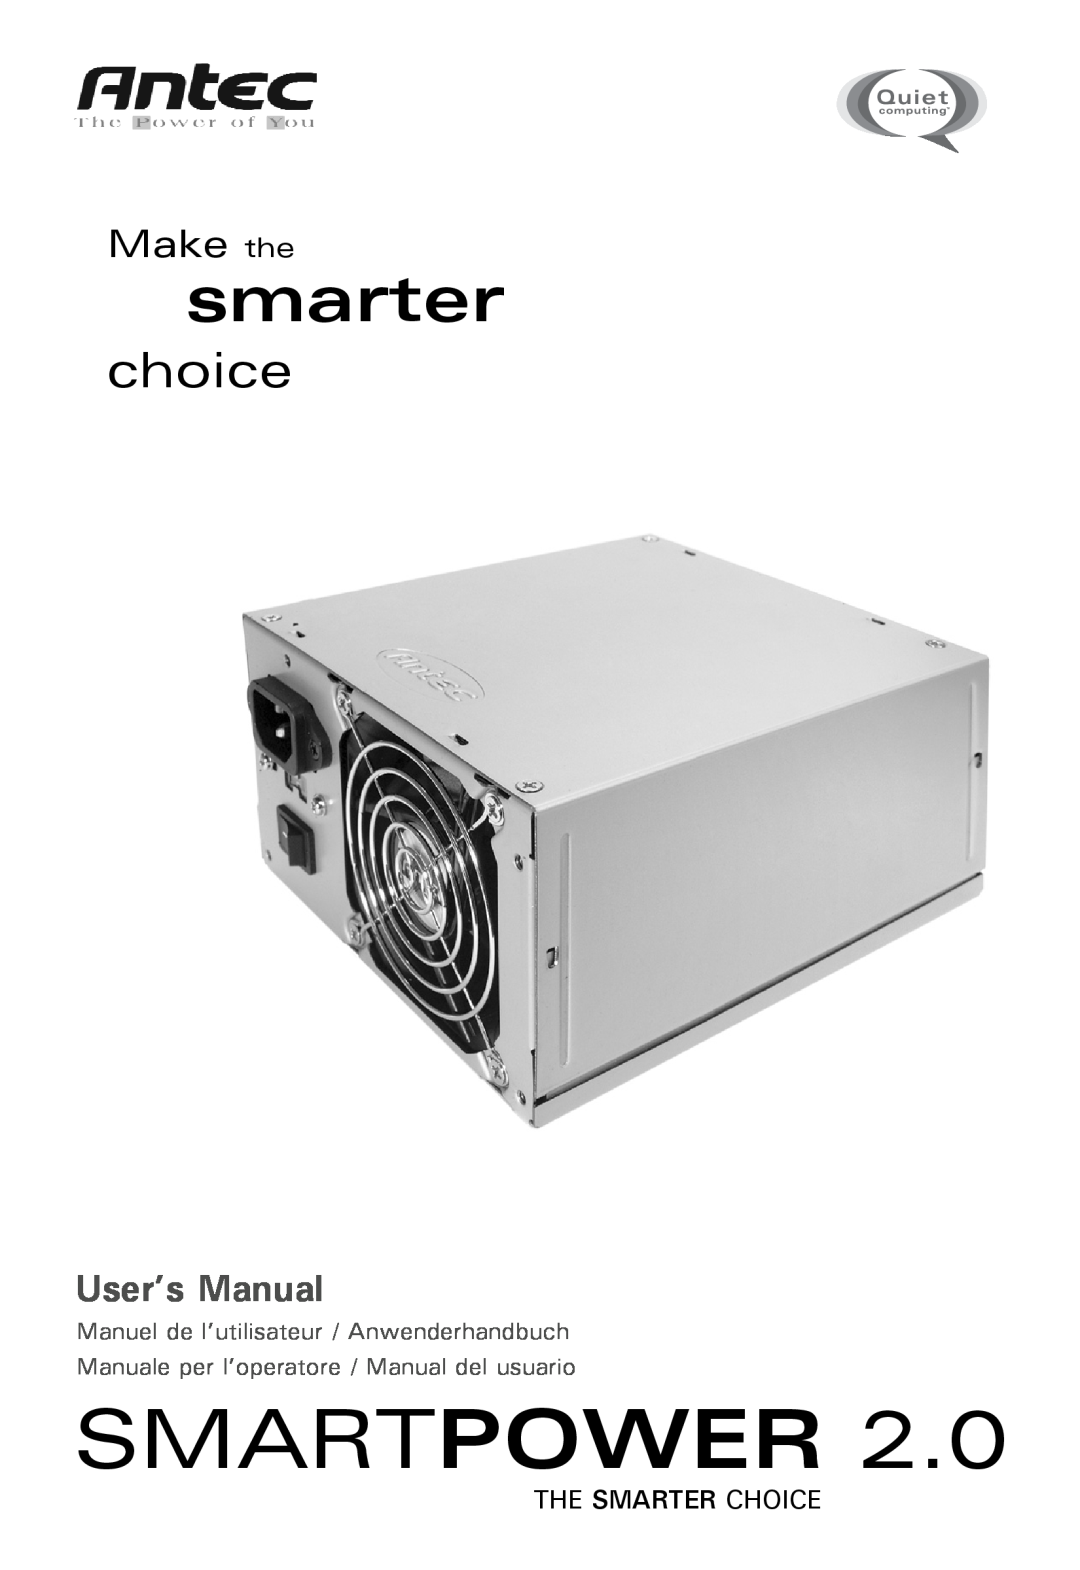 Antec SMARTPOWER 2.0 user manual Smartpower, smarter, choice, Make the, User’s Manual, The Smarter Choice 